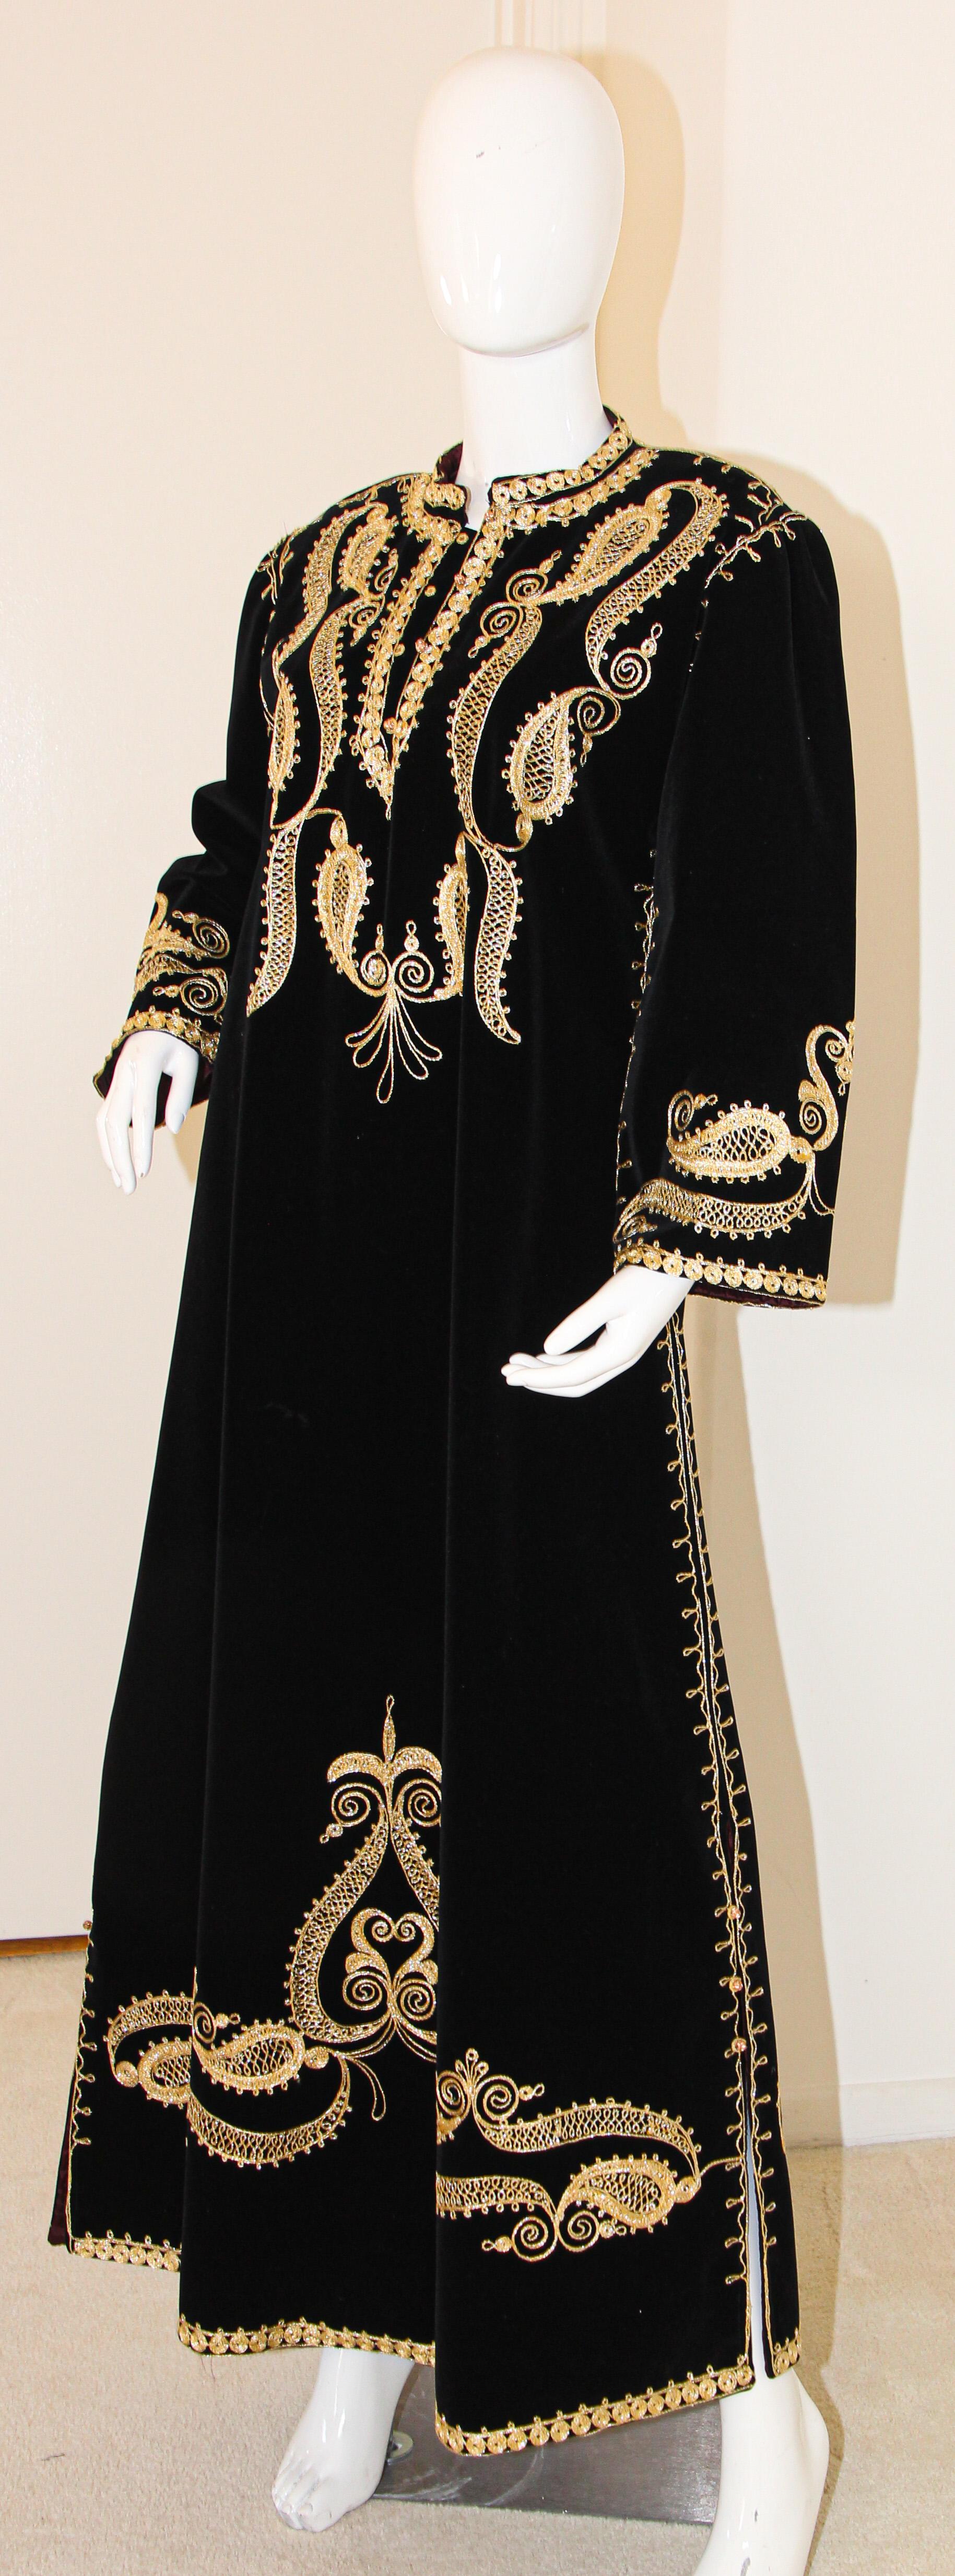 black and gold moroccan kaftan